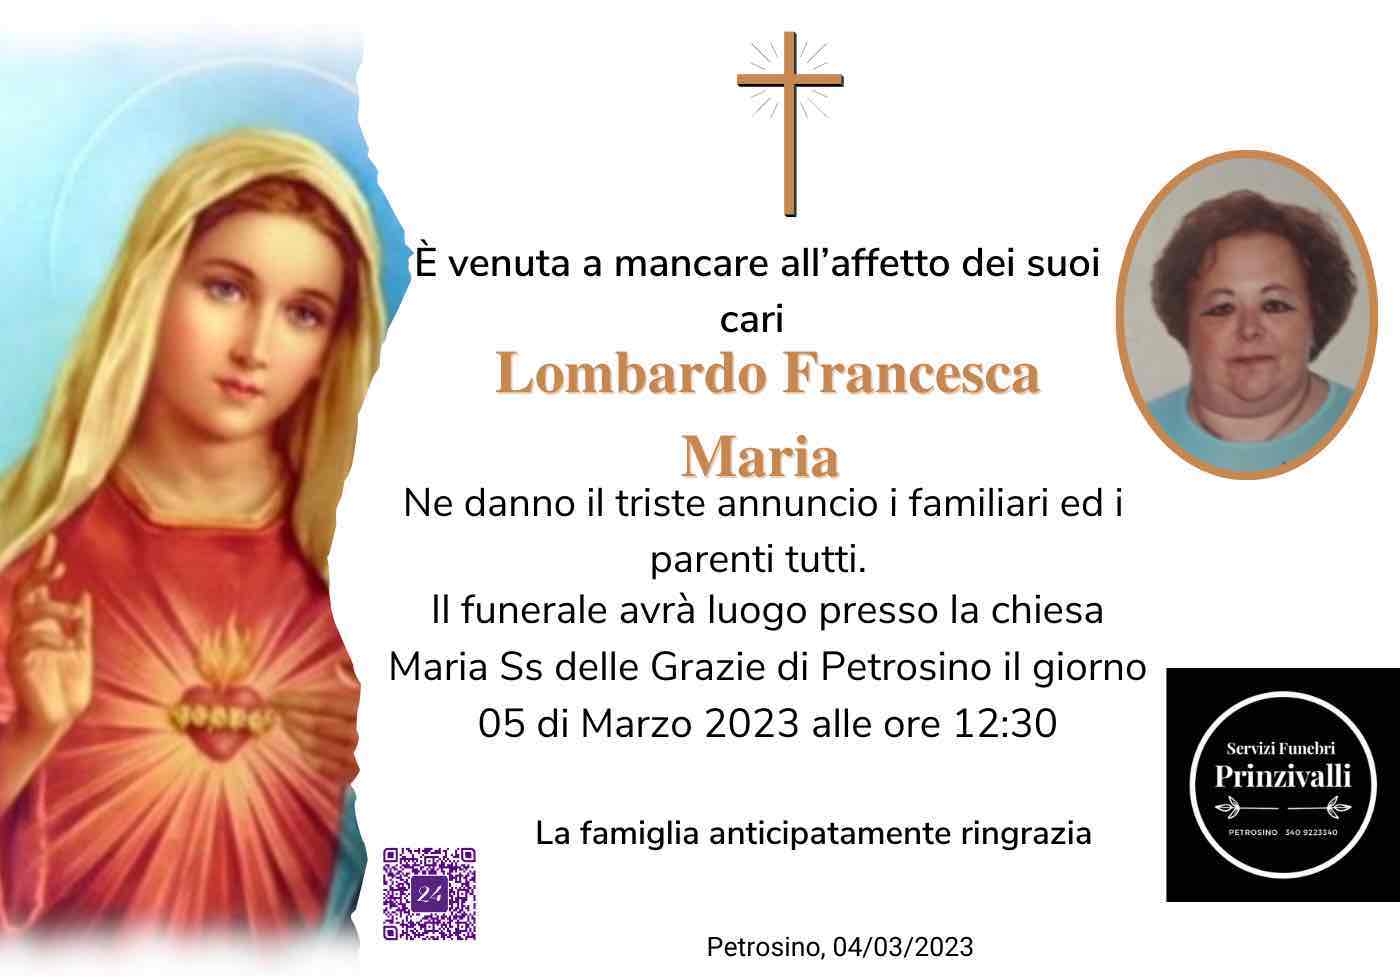 Francesca Maria Lombardo